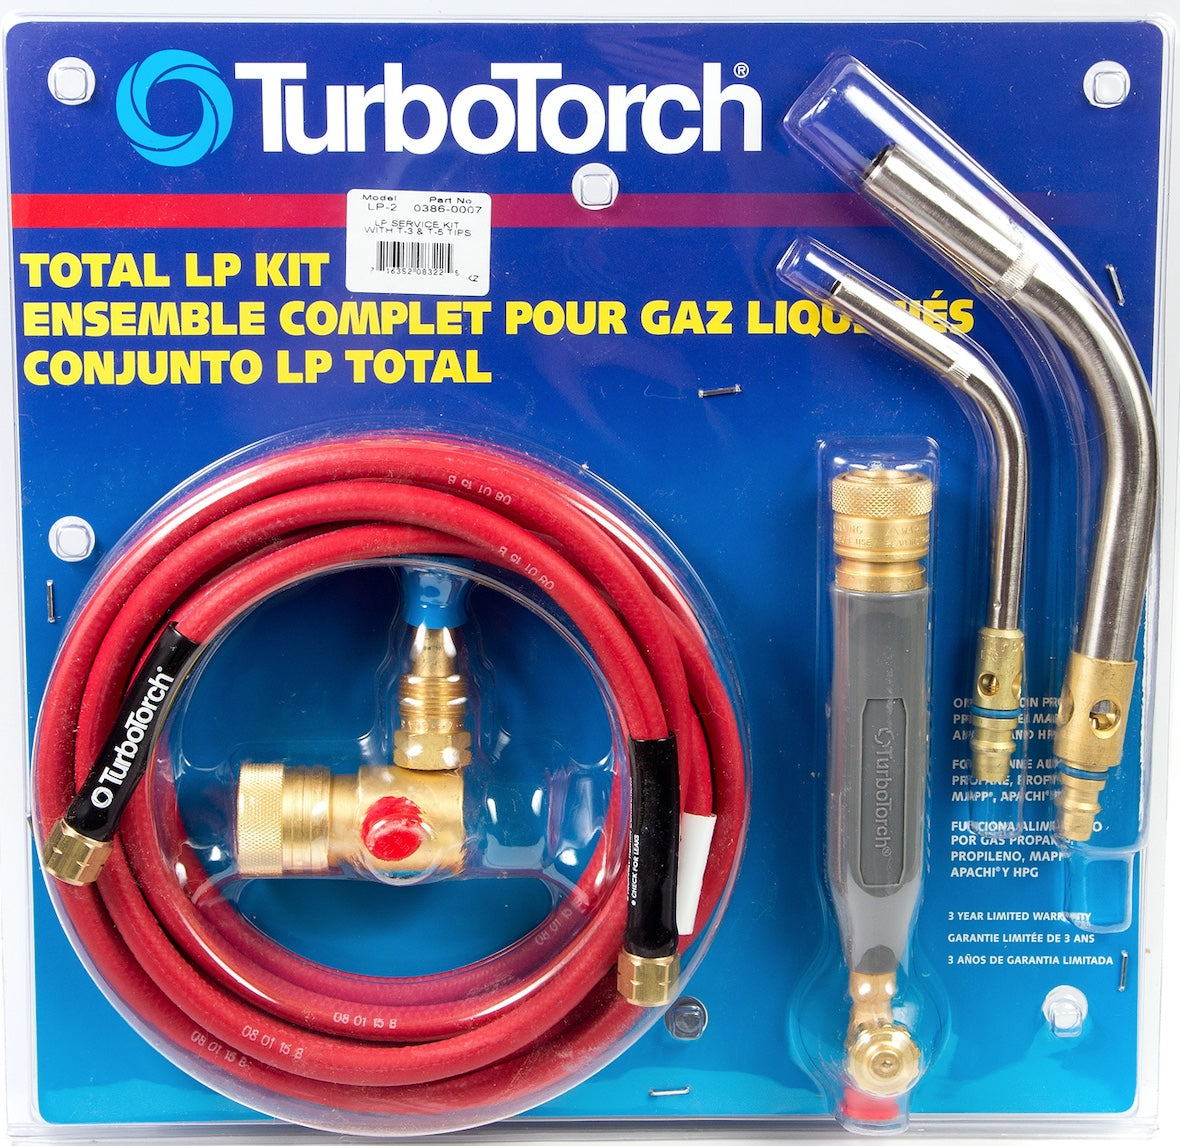 TurboTorch LP-2 Torch Kit 0386-0007